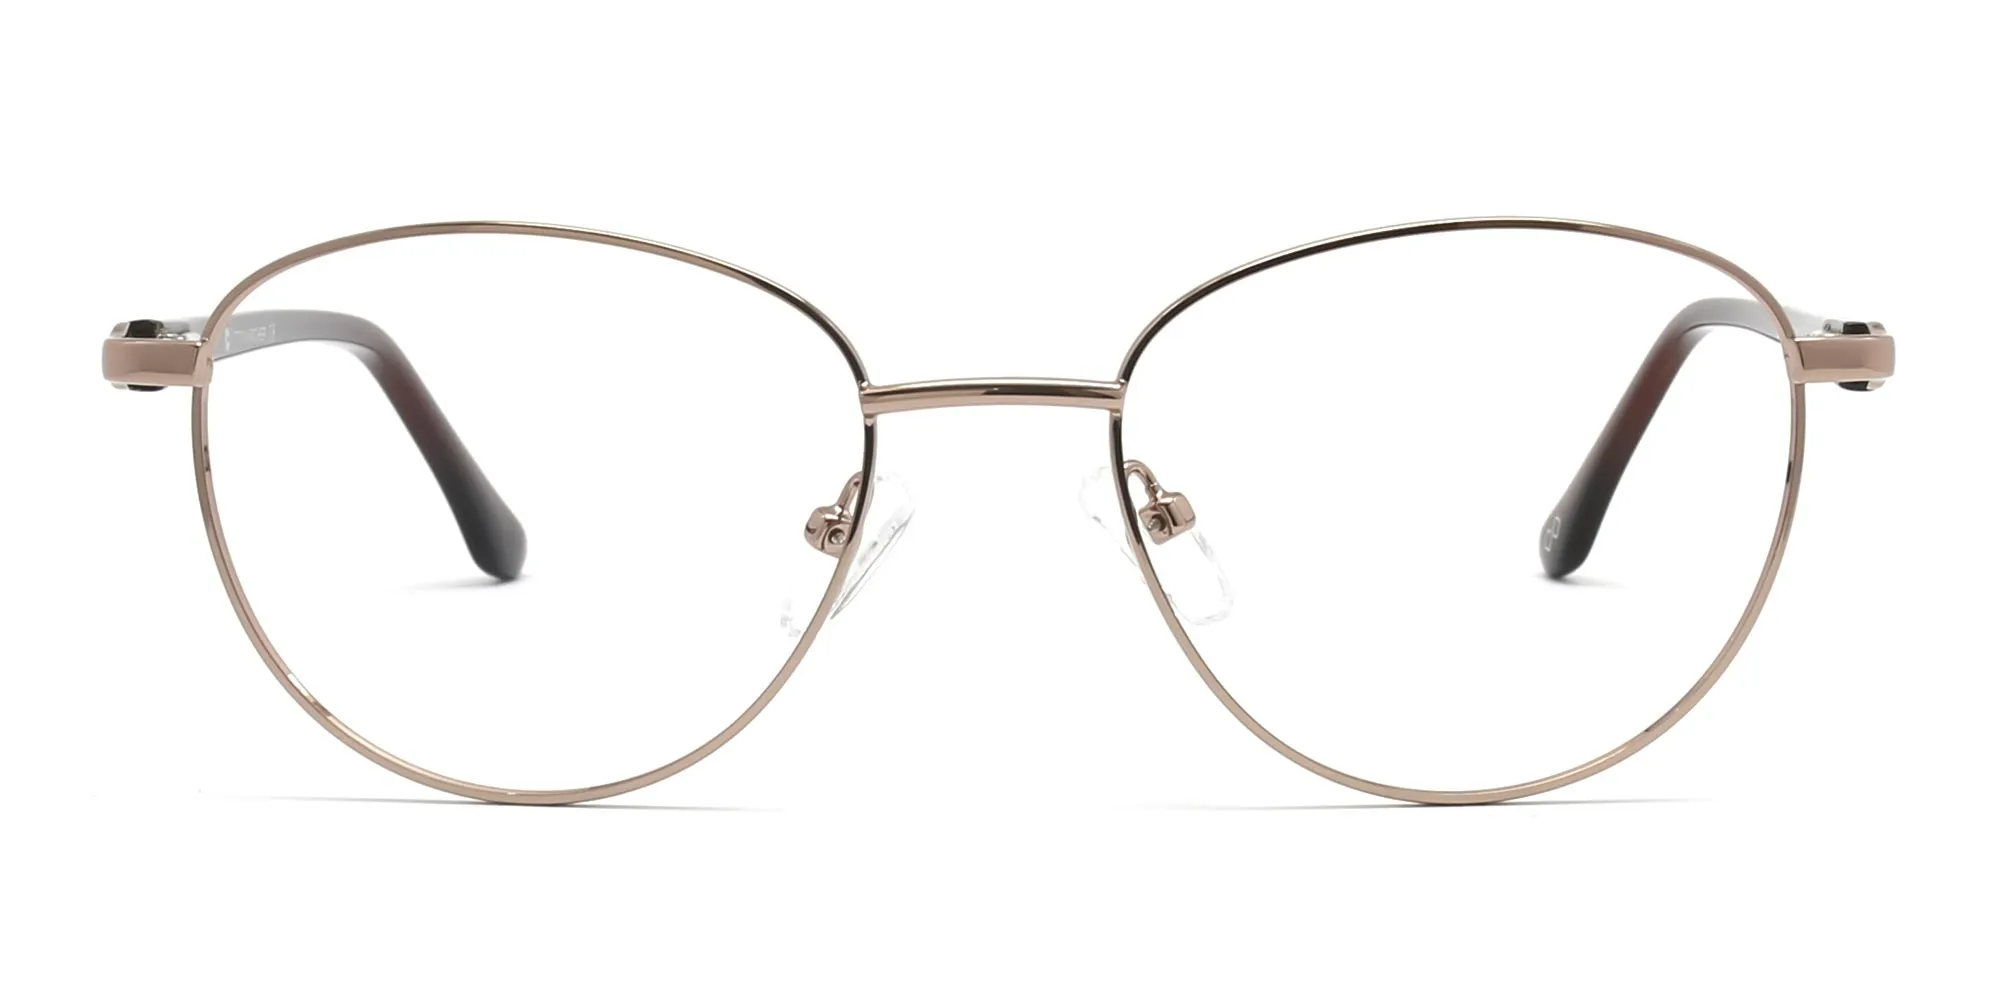 WARRINGTON 3 - Round Brown Glasses Frames | Specscart.®